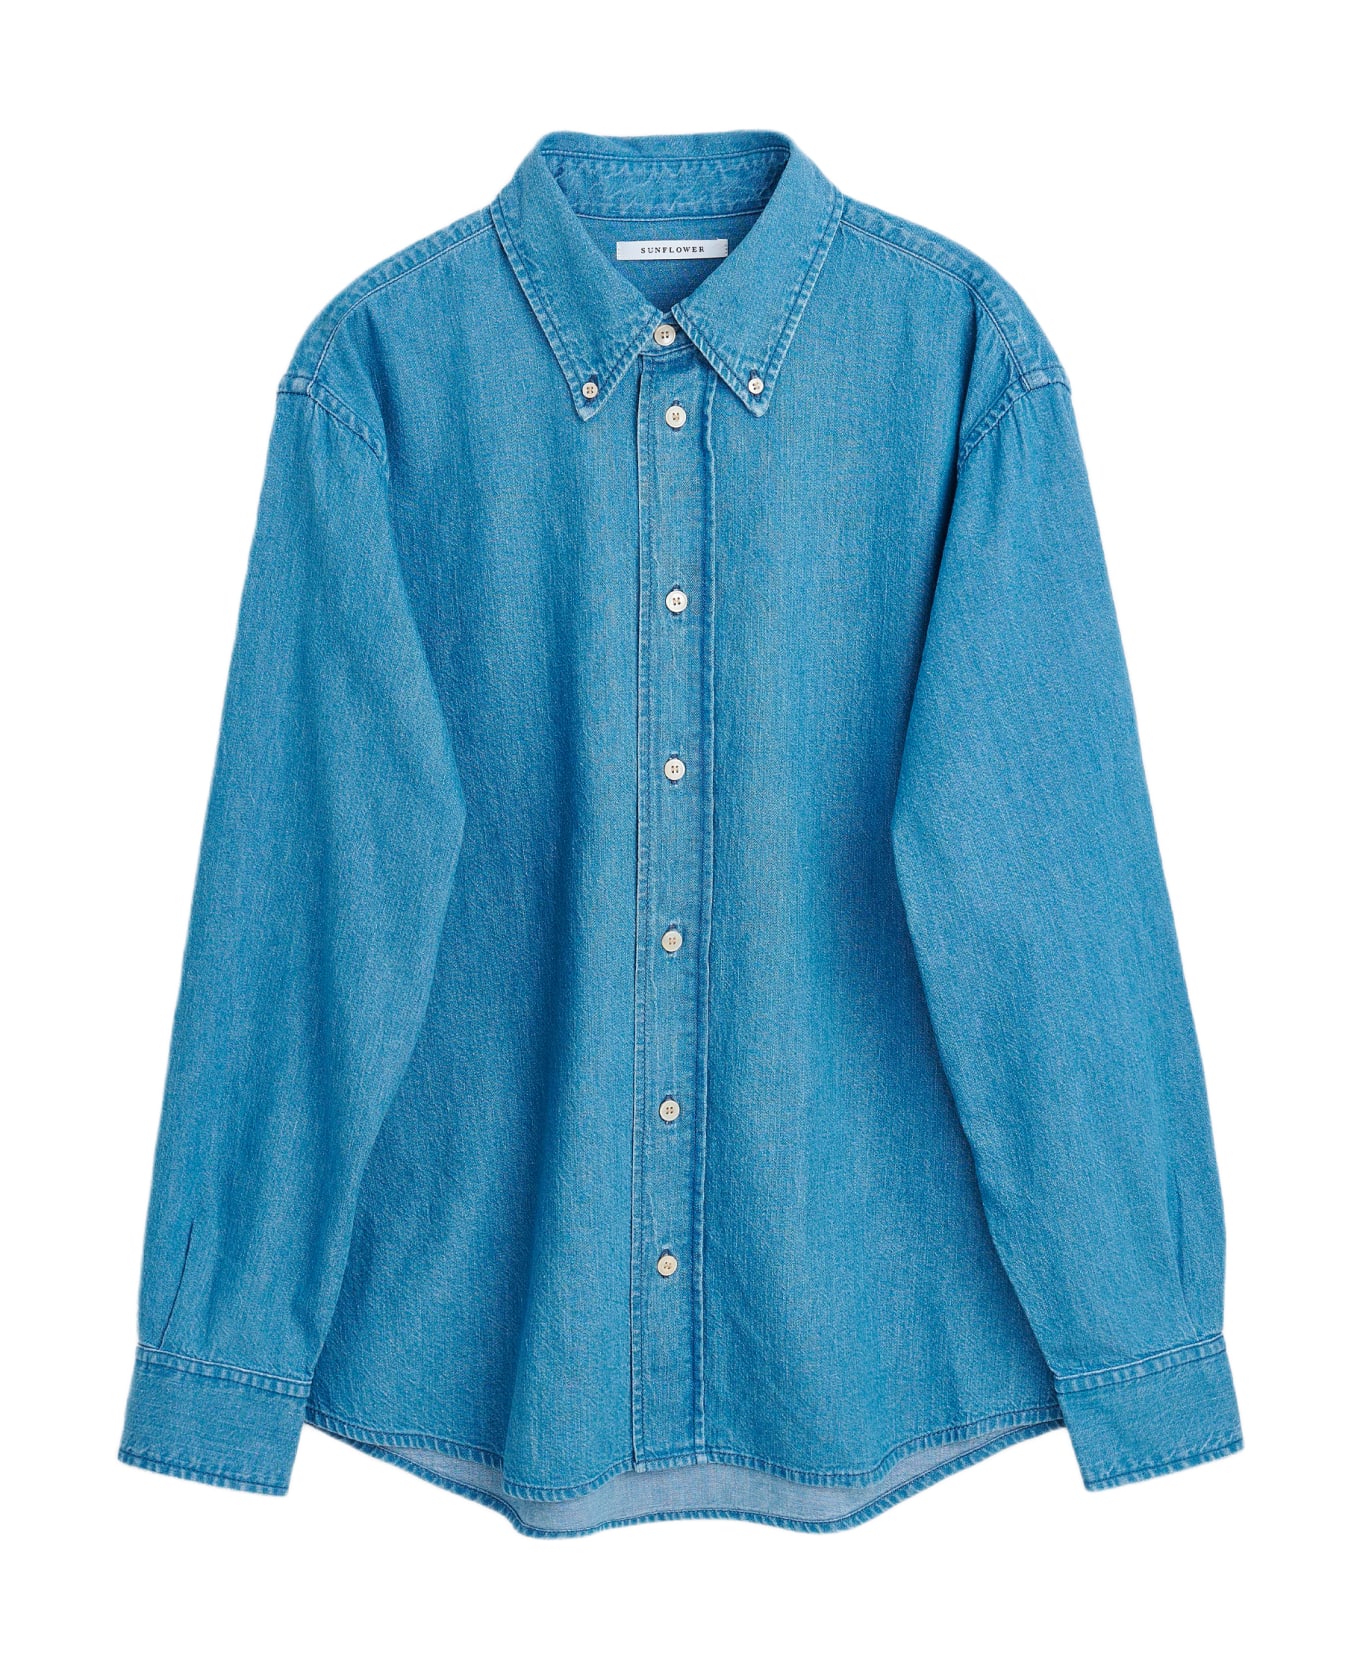 Sunflower #1189 Mid blue chambray denim shirt with long sleeves - Denim Button Down Shirt - Denim blu